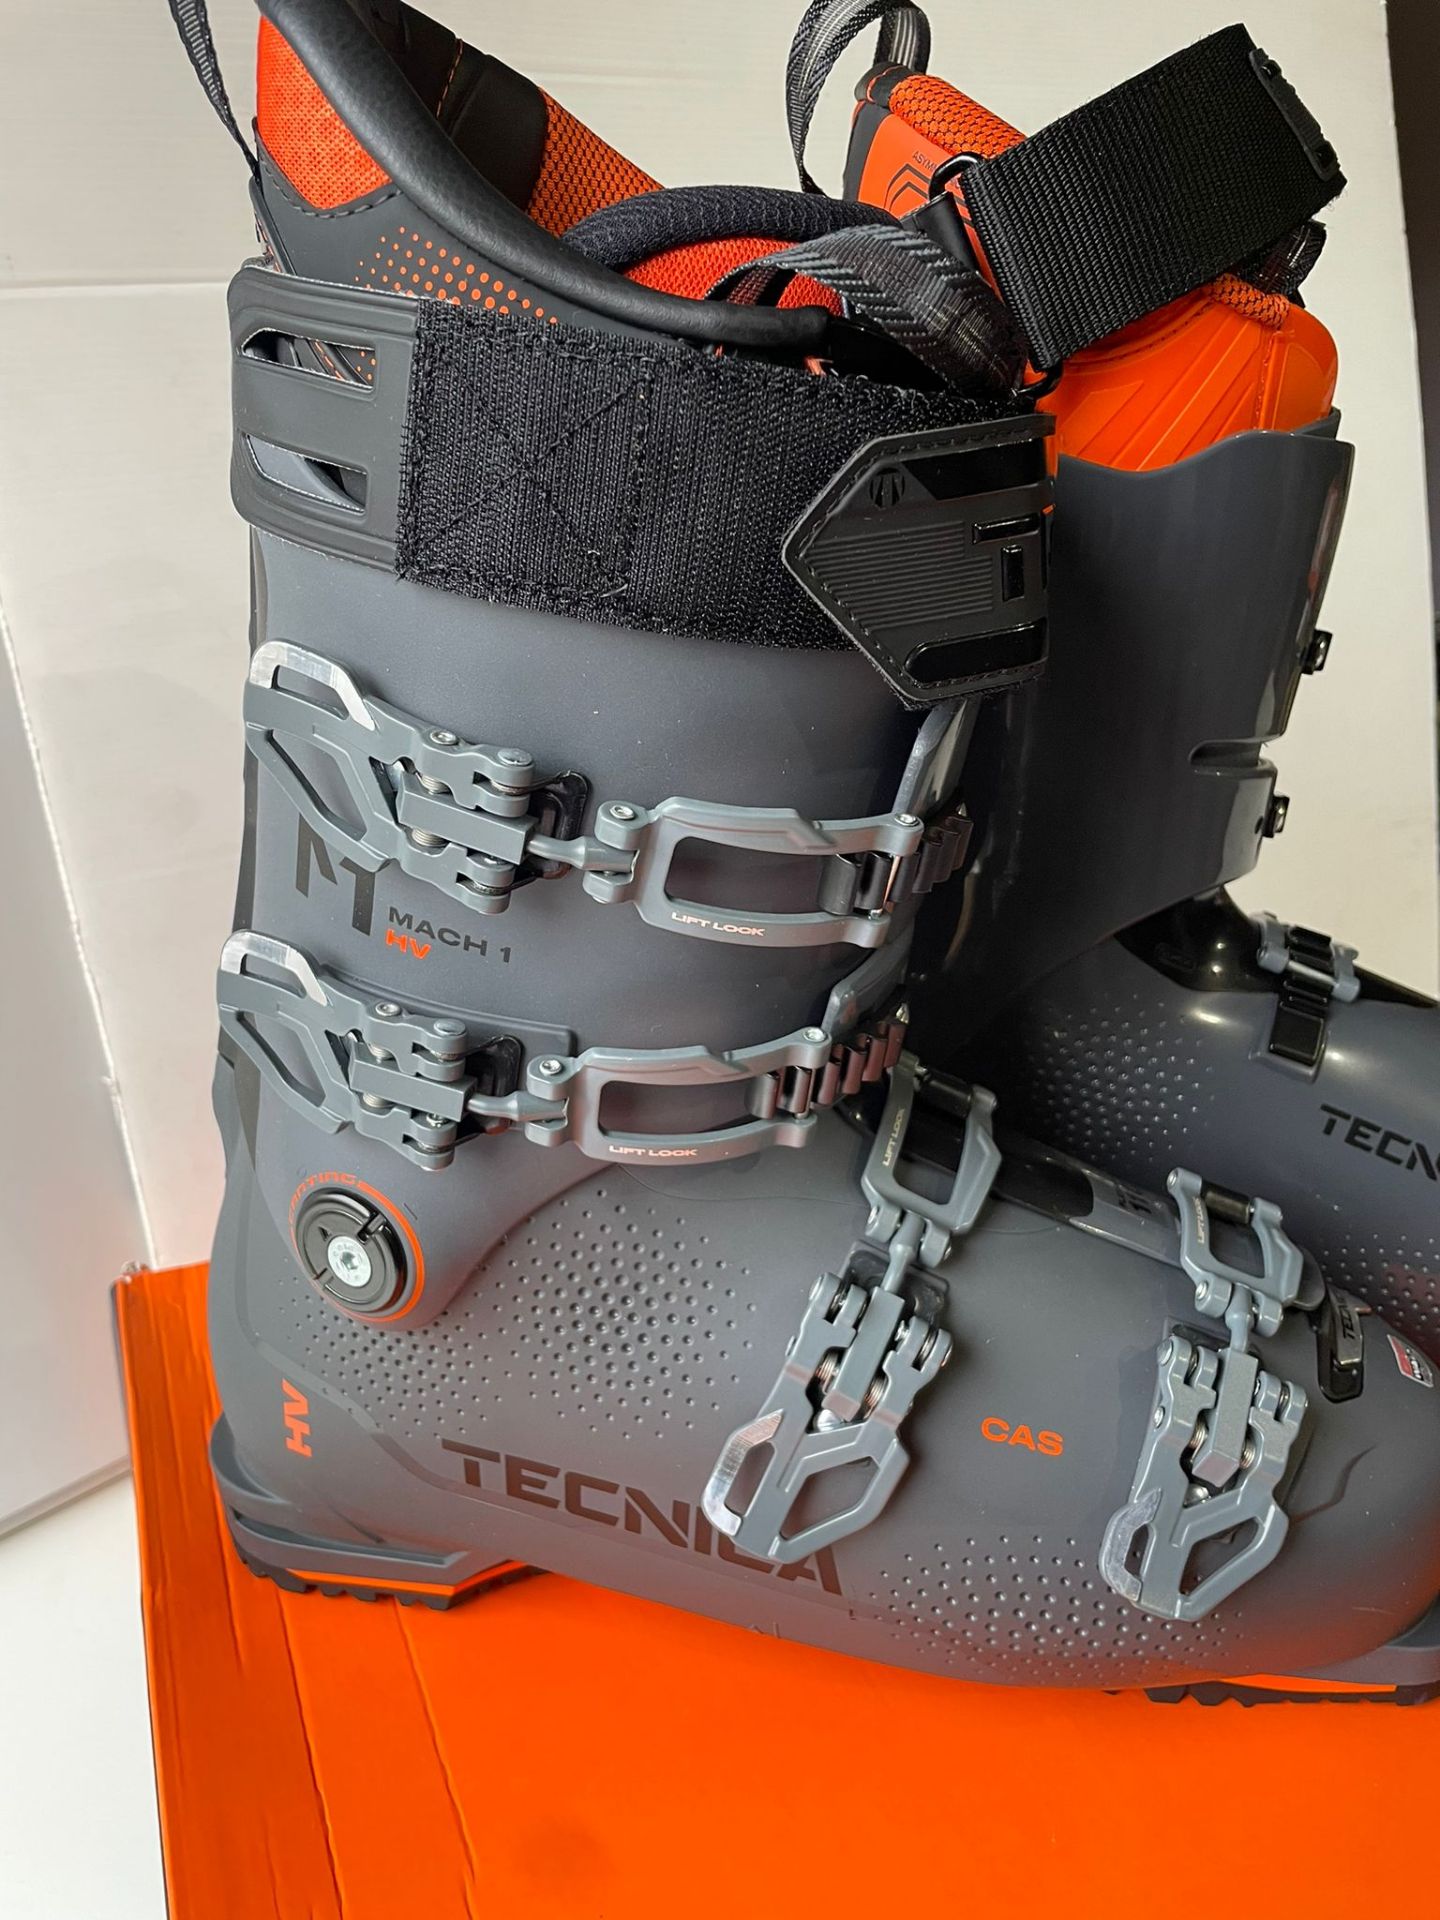 Tecnica ski boot, UK size 10.5 - Image 3 of 4